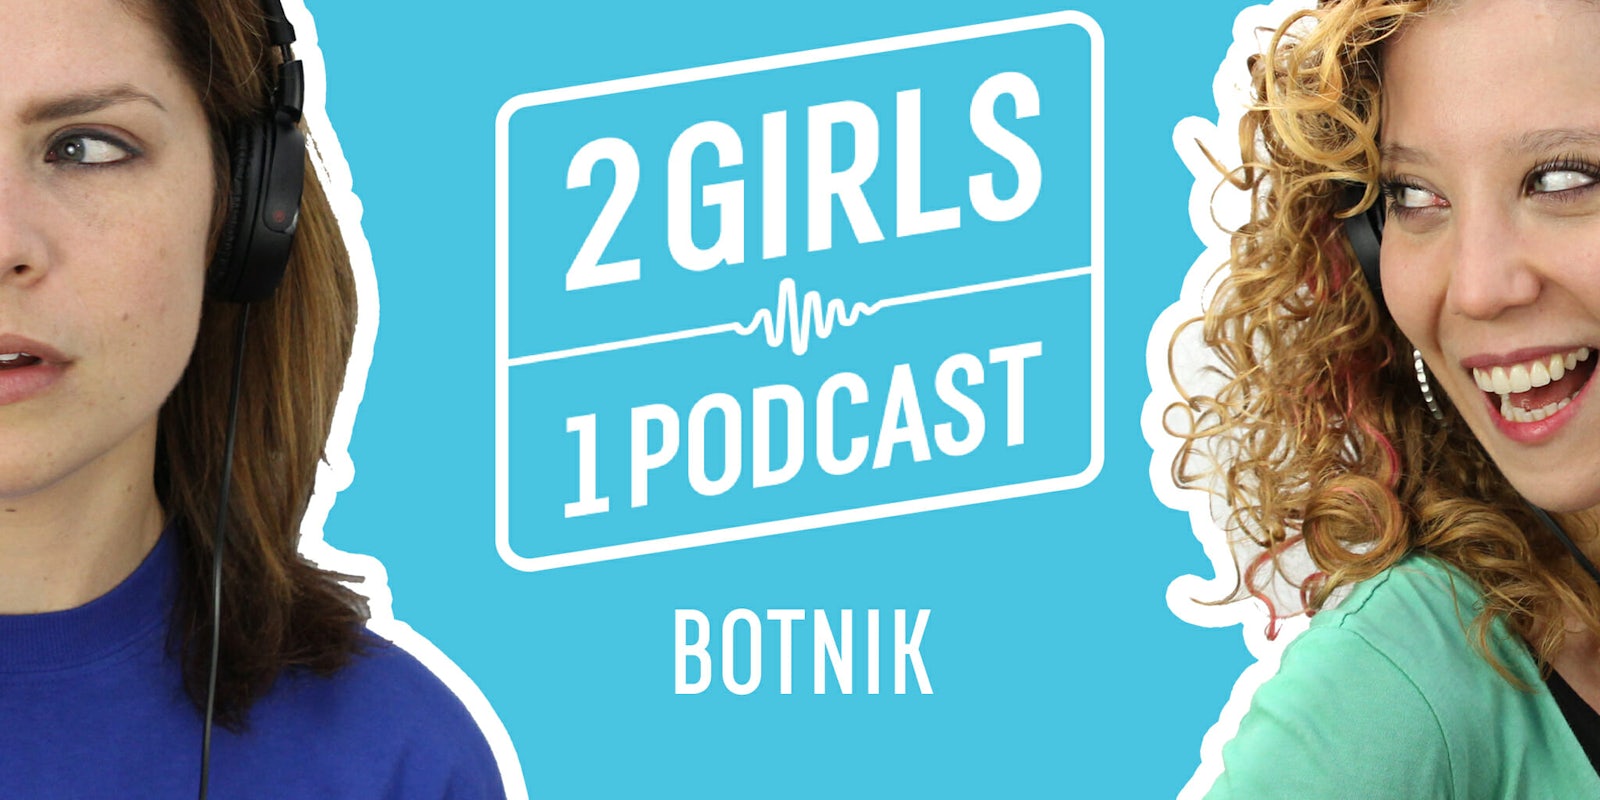 2 Girls 1 Podcast BOTNIK